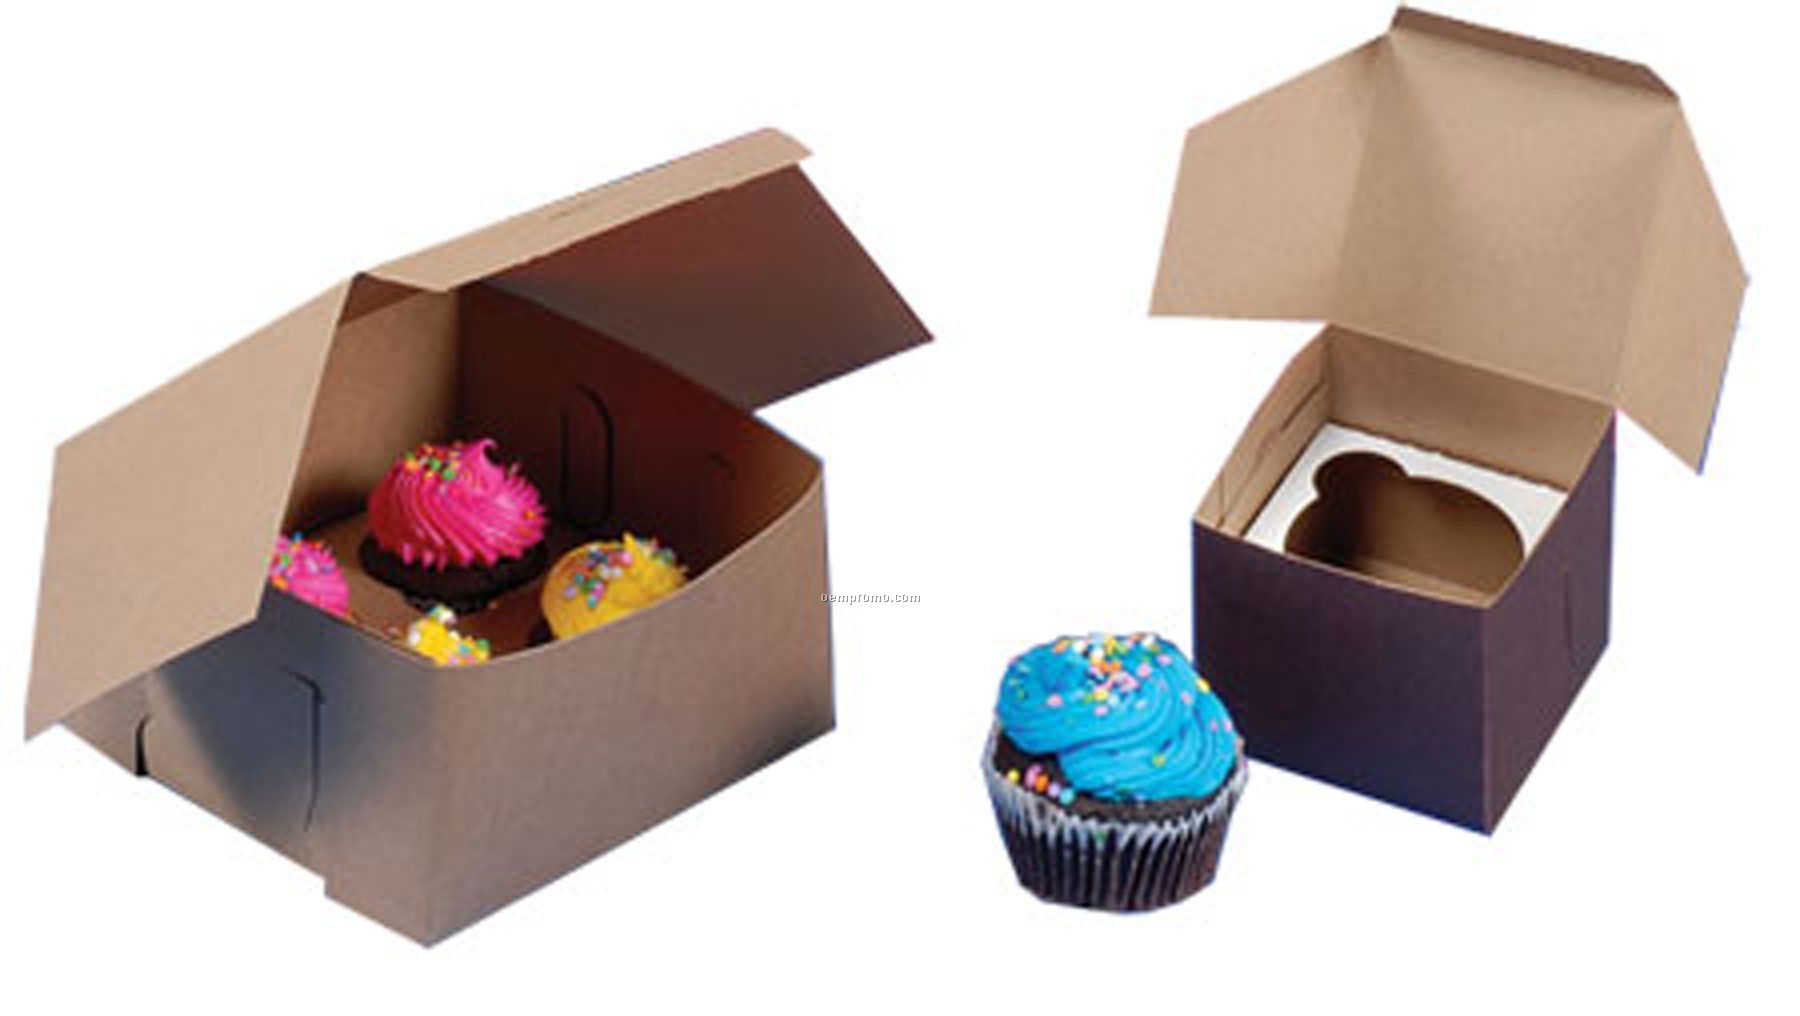 24 Mini/12 Regular Cupcake Boxes (14"X10"X4")